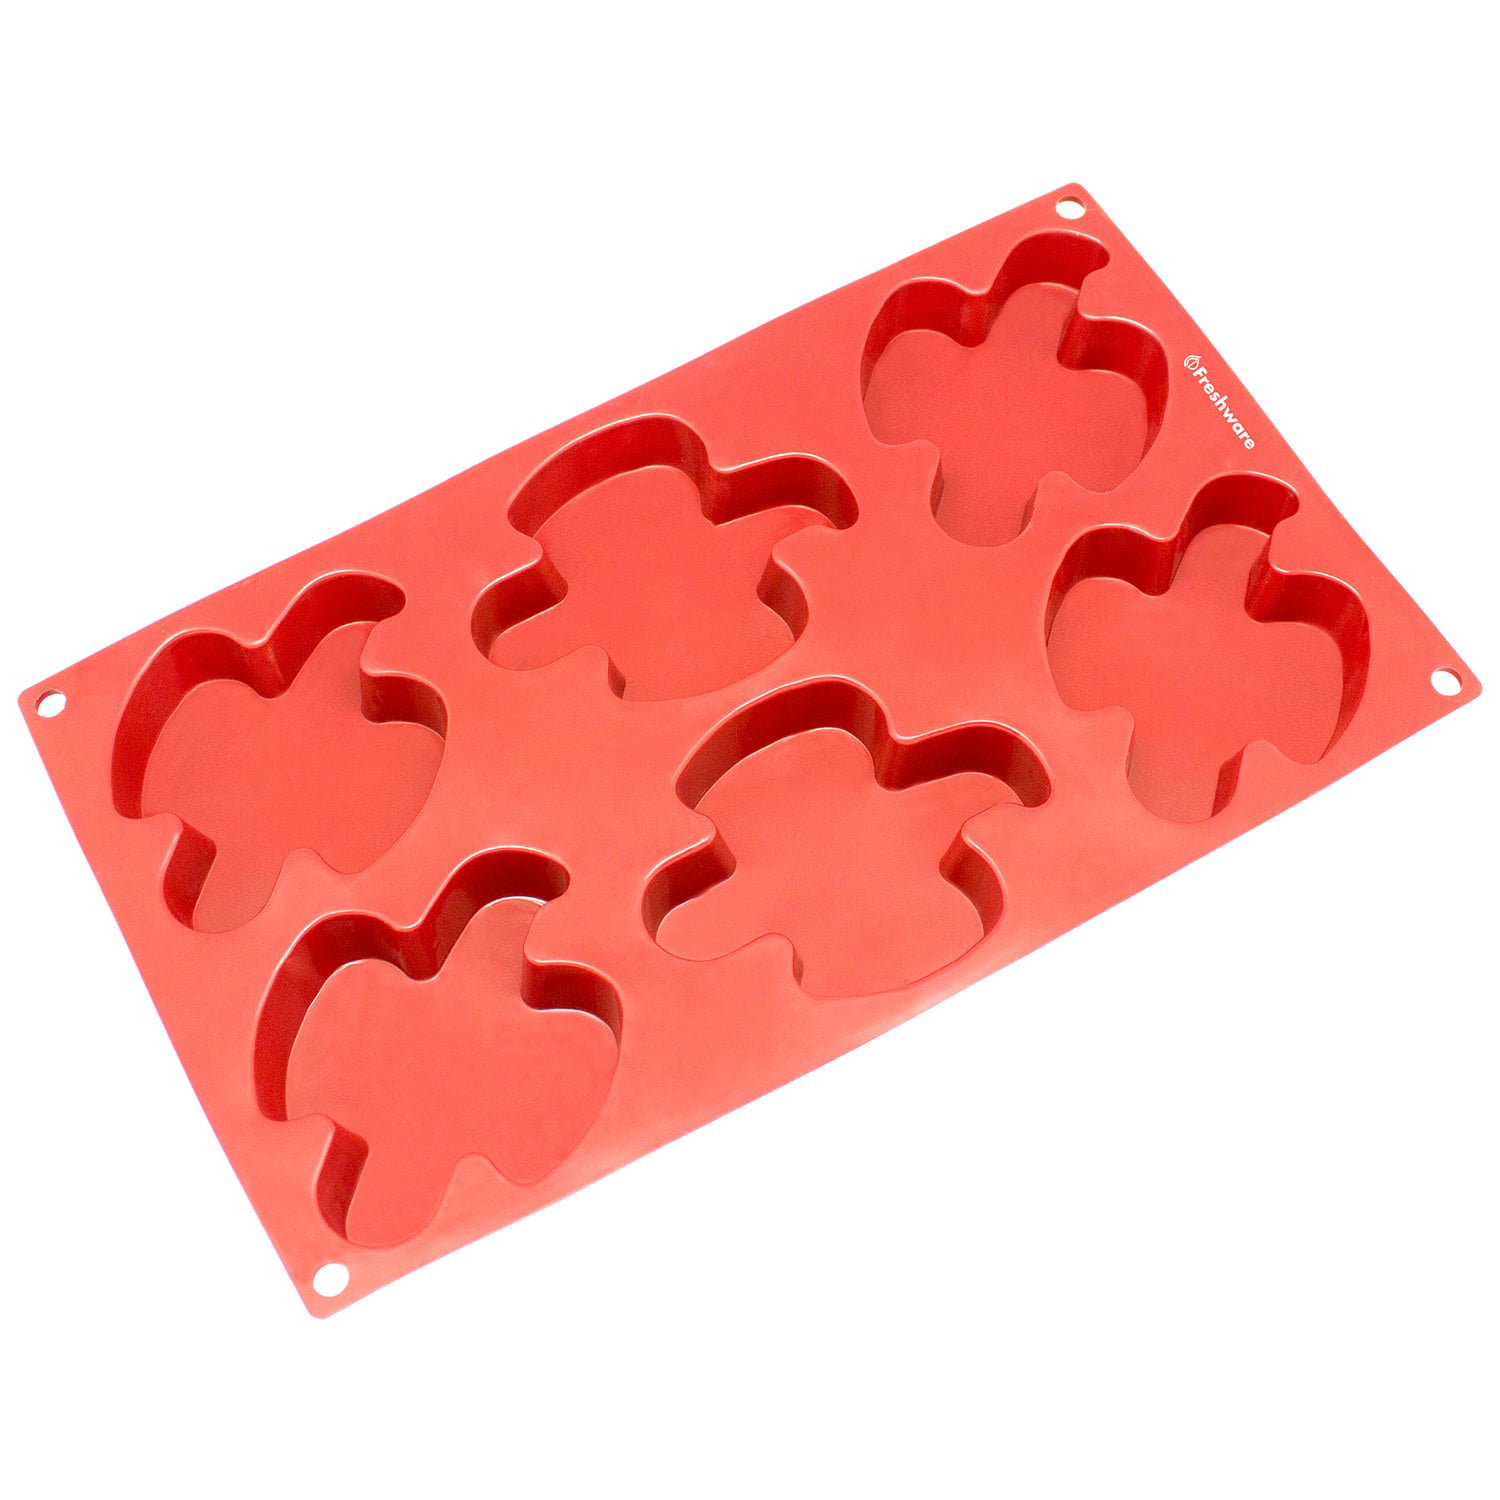  Rectangle Silicone Soap Mold 4oz Large Soap Molds for Soap  Making,Rectangle Silicone Mold for Soap : Everything Else